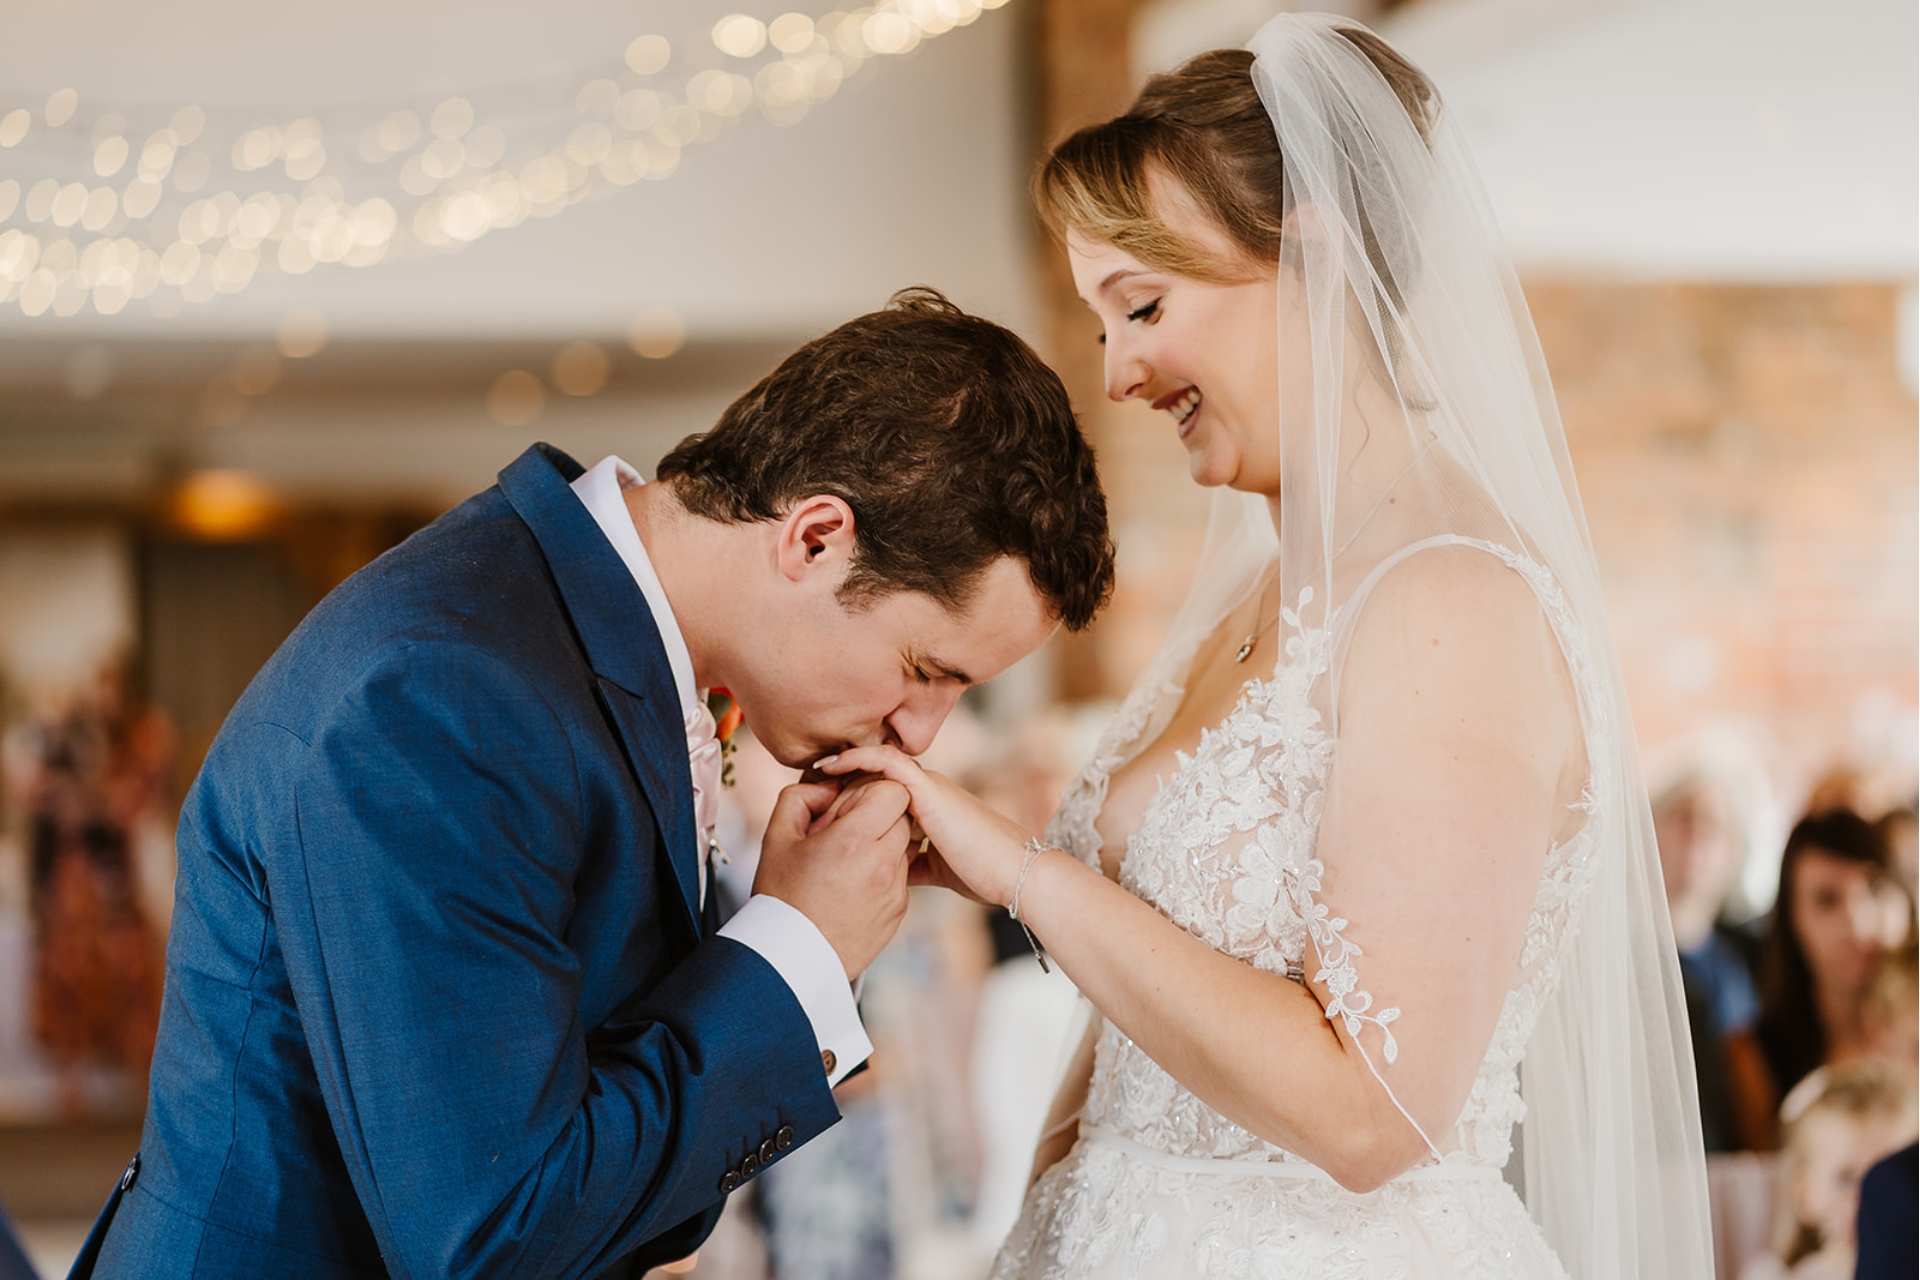 Groom kisses bride's hand after placing wedding ring on finger